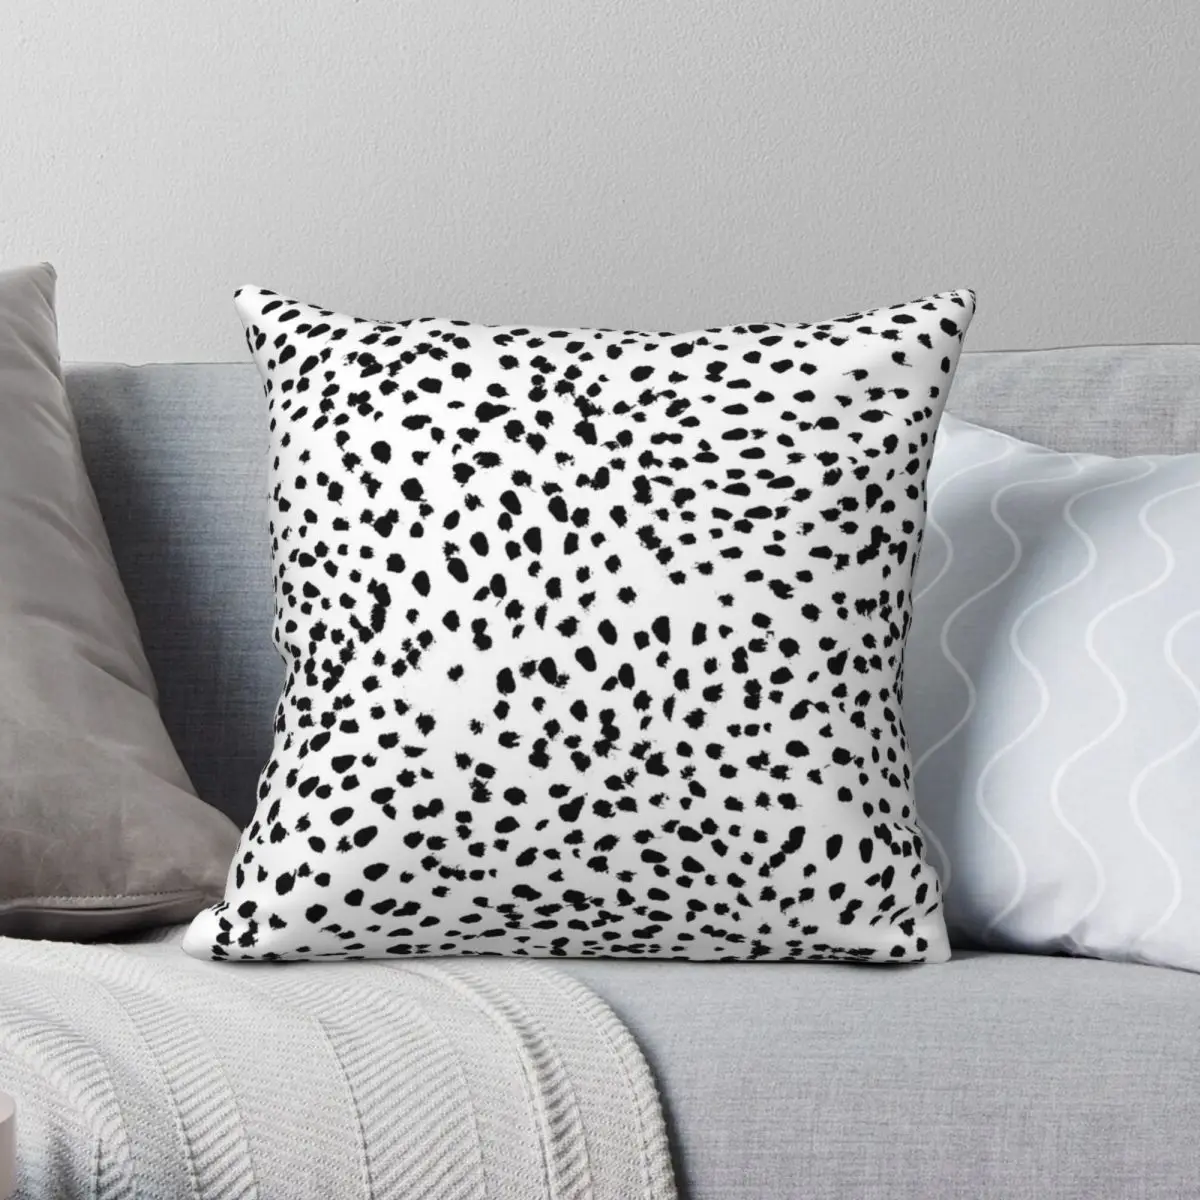 

Nadia Black And White Animal Dalmatian Spot Square Pillowcase Polyester Velvet Linen Zip Decor Pillow Case for Bed Cushion Cover